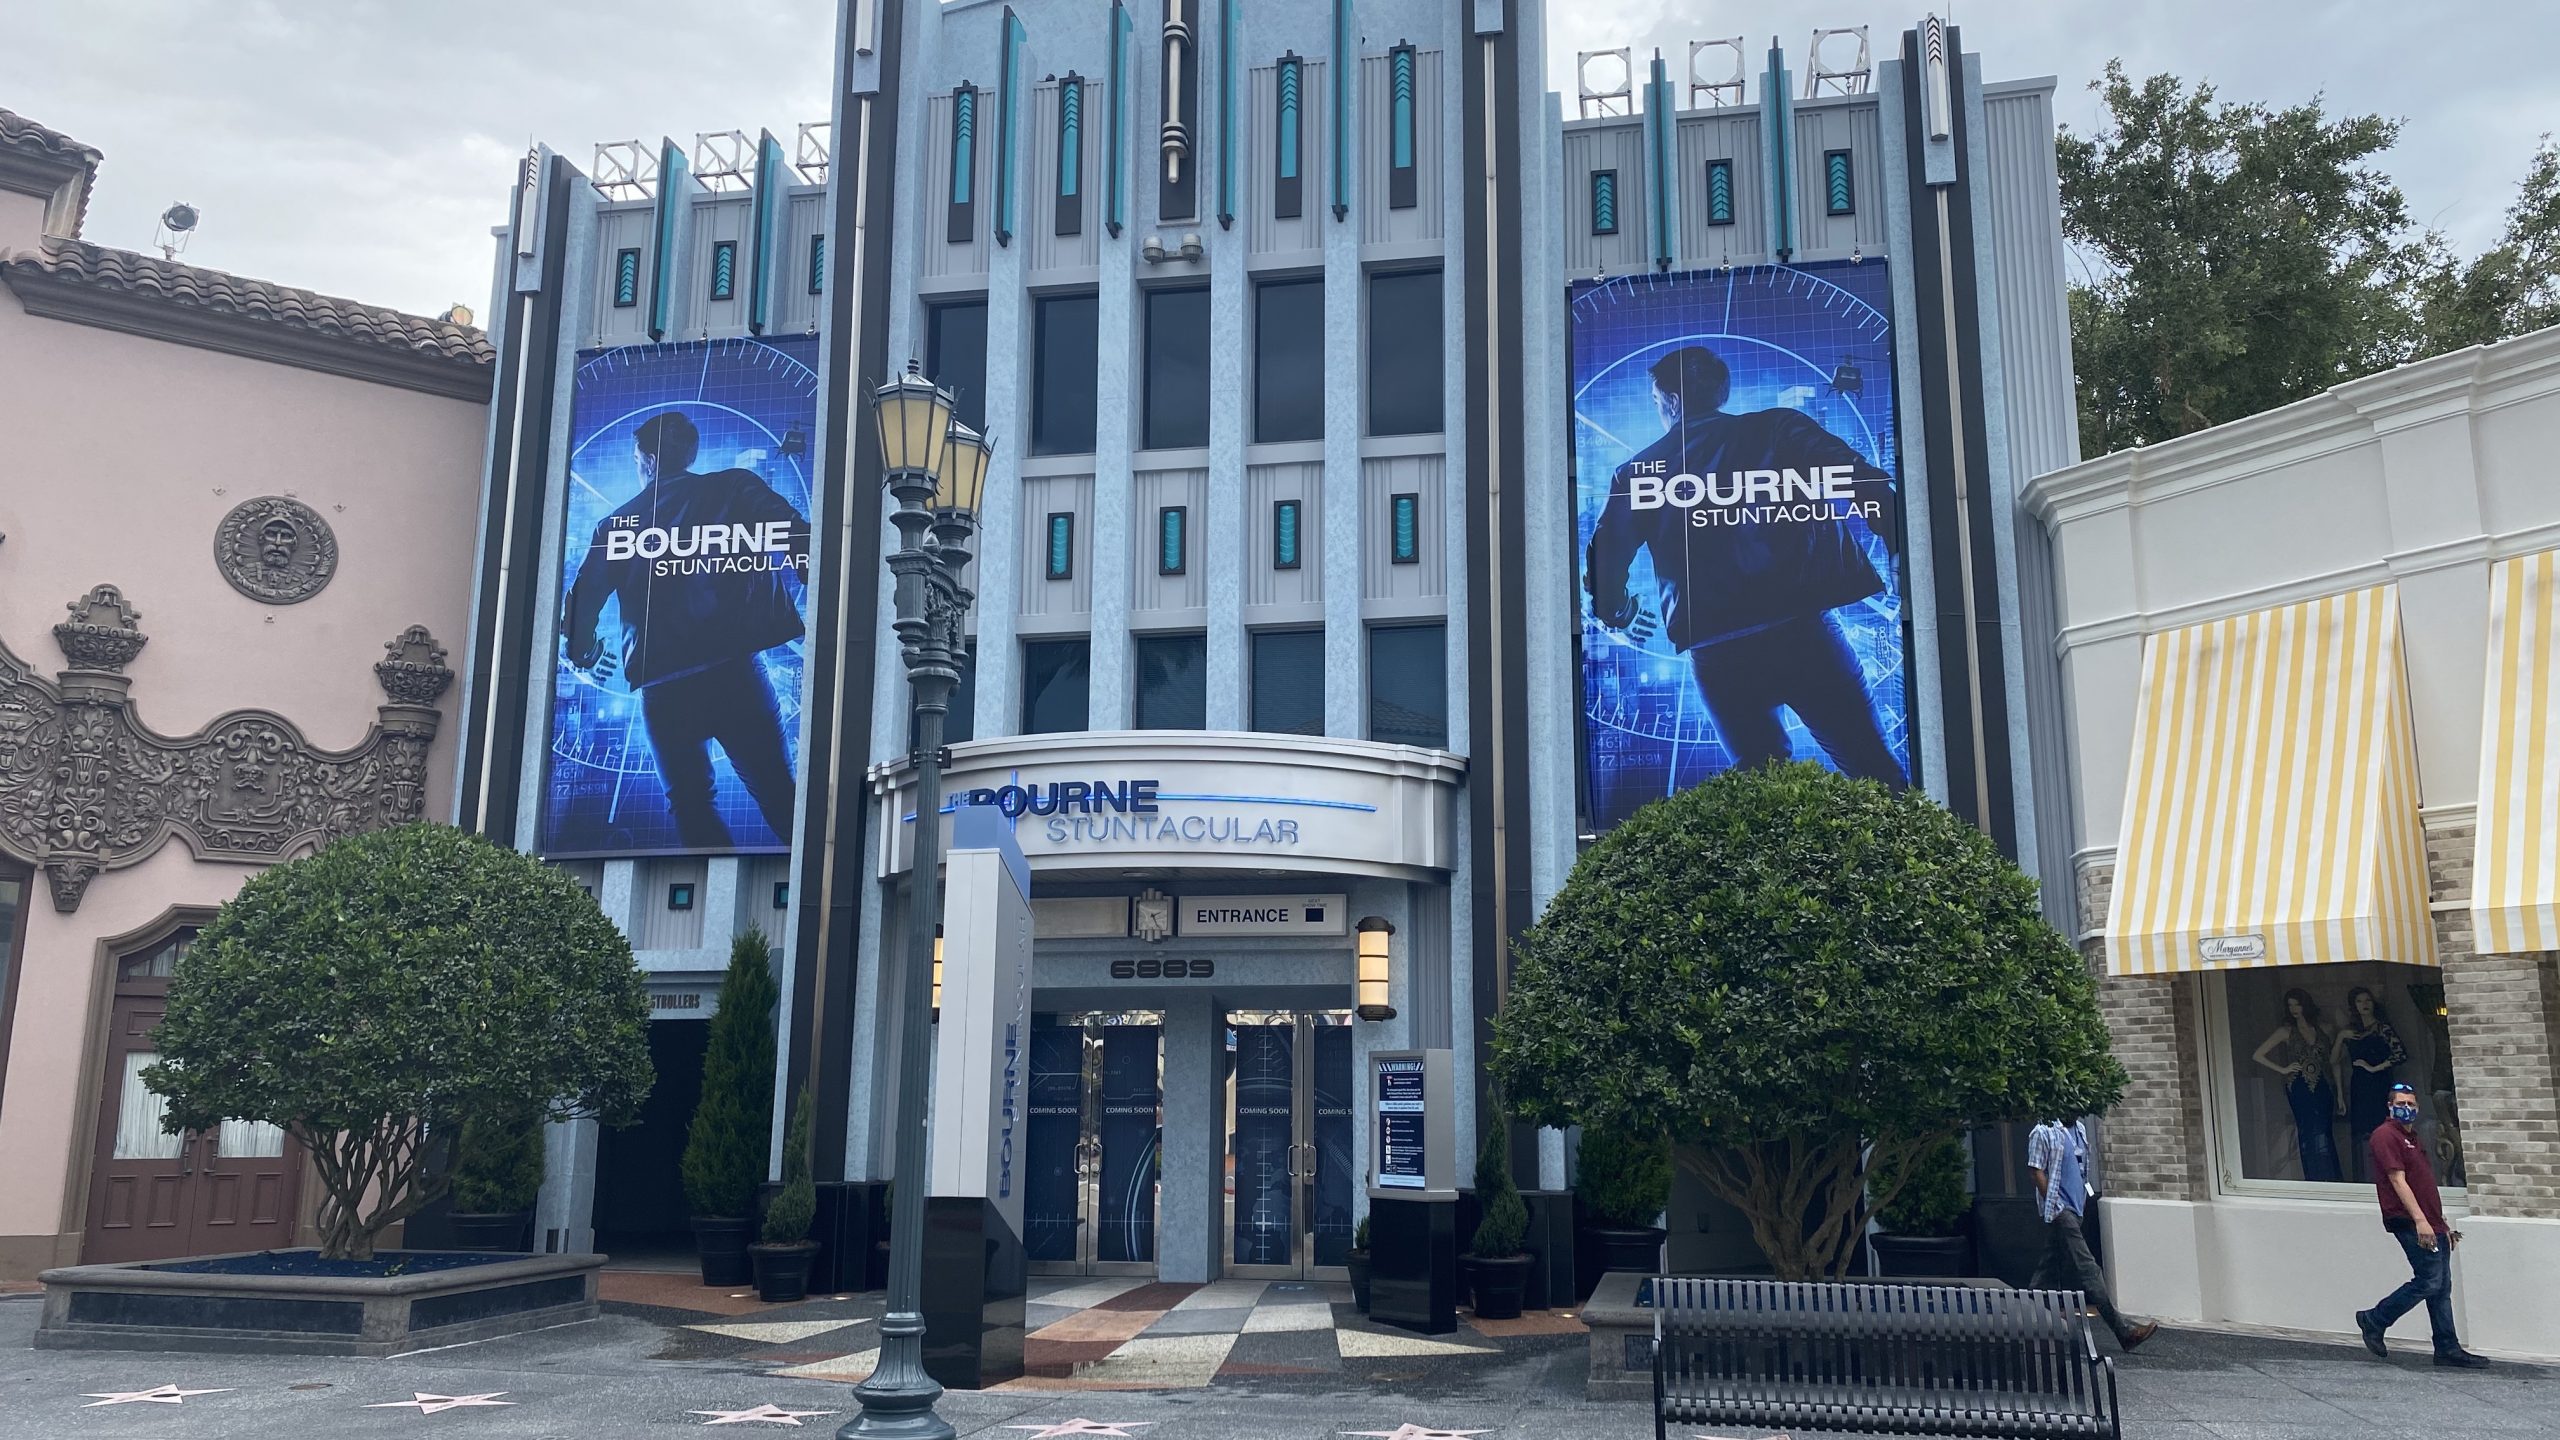 Universal Orlando’s Bourne Stuntacular Opening Soon